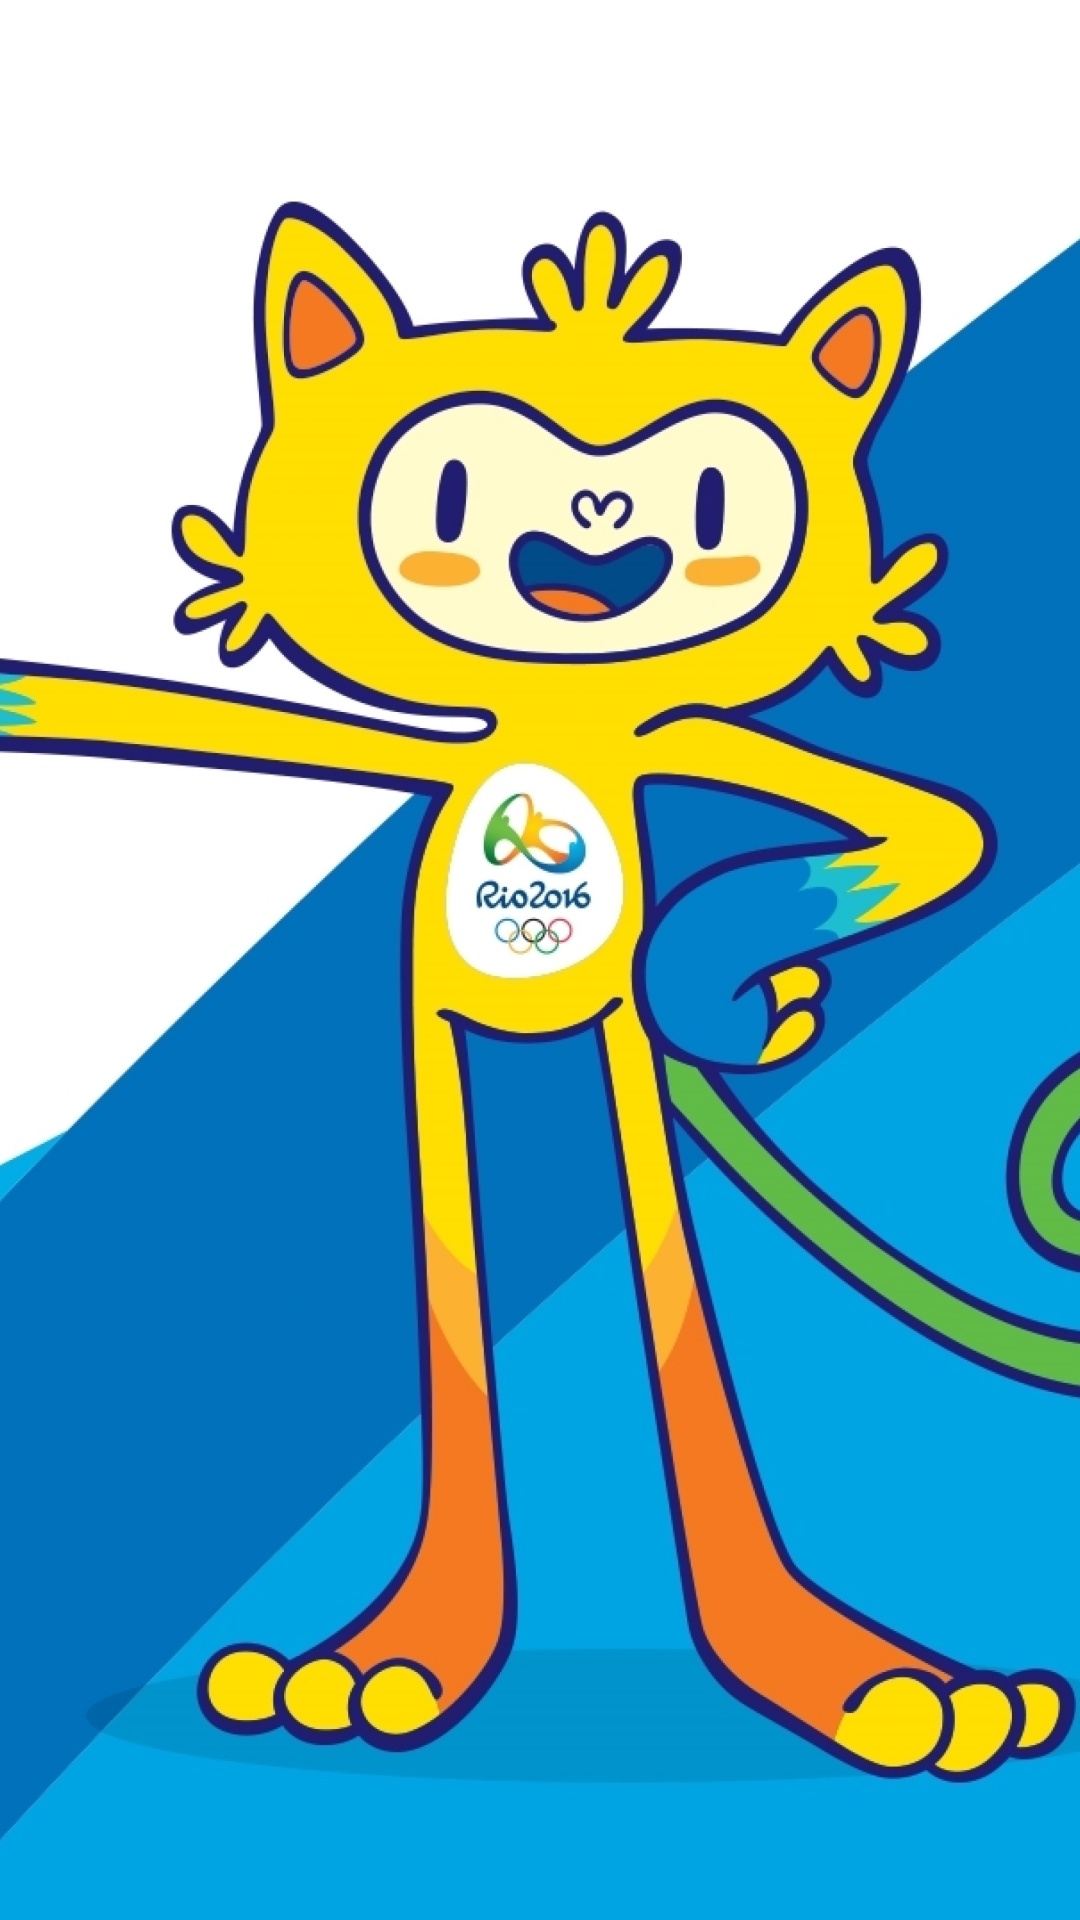 Sfondi Olympics Mascot Vinicius Rio 2016 1080x1920